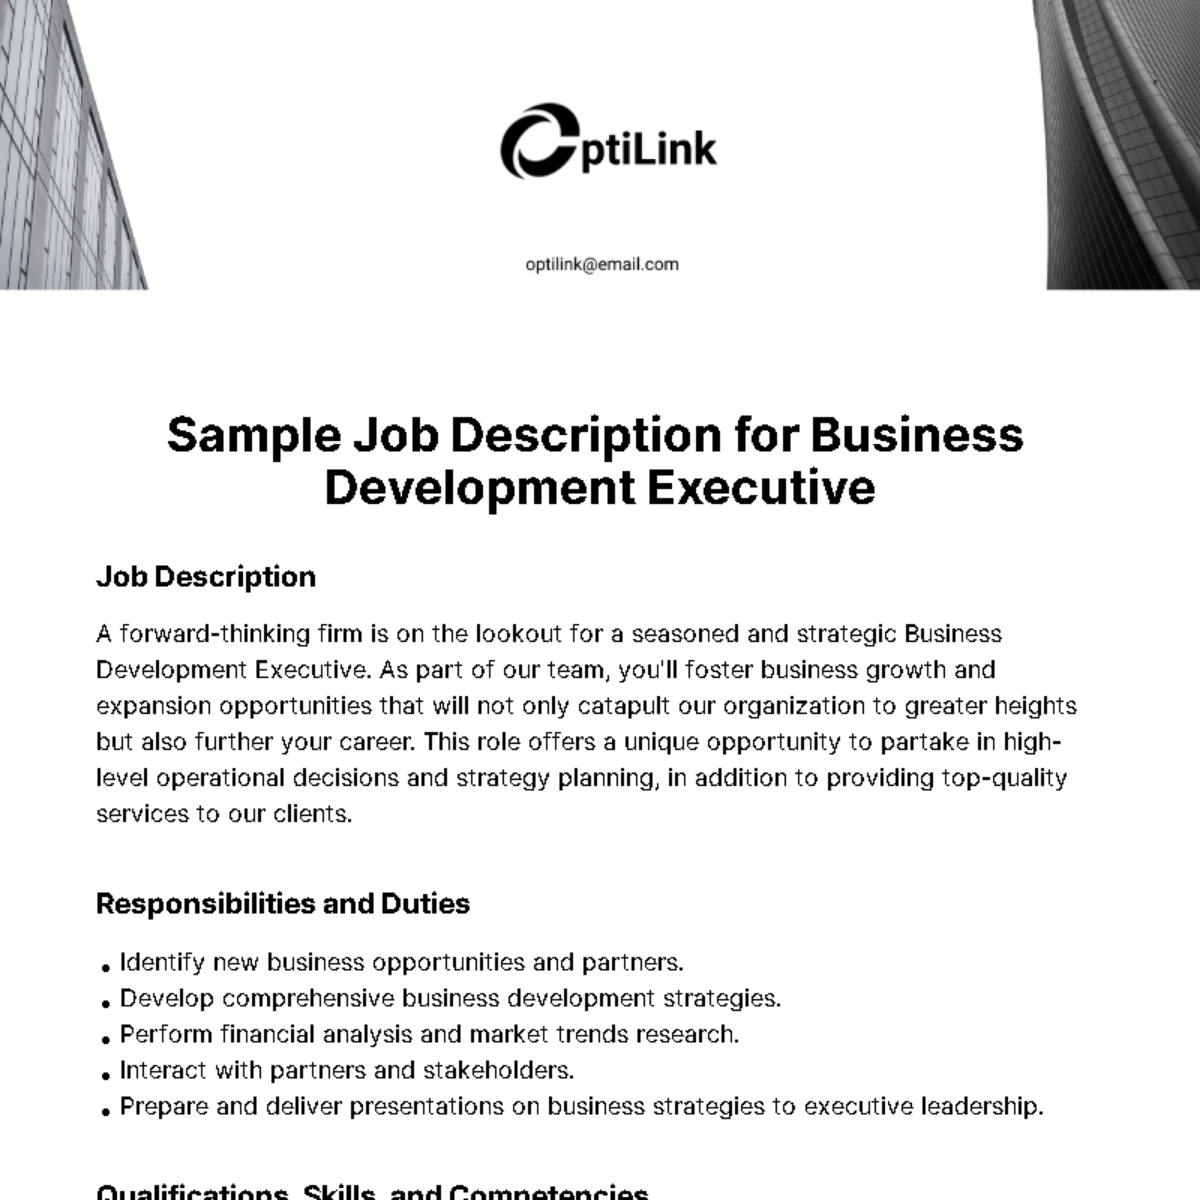 Sample Job Description for Business Development Executive Template